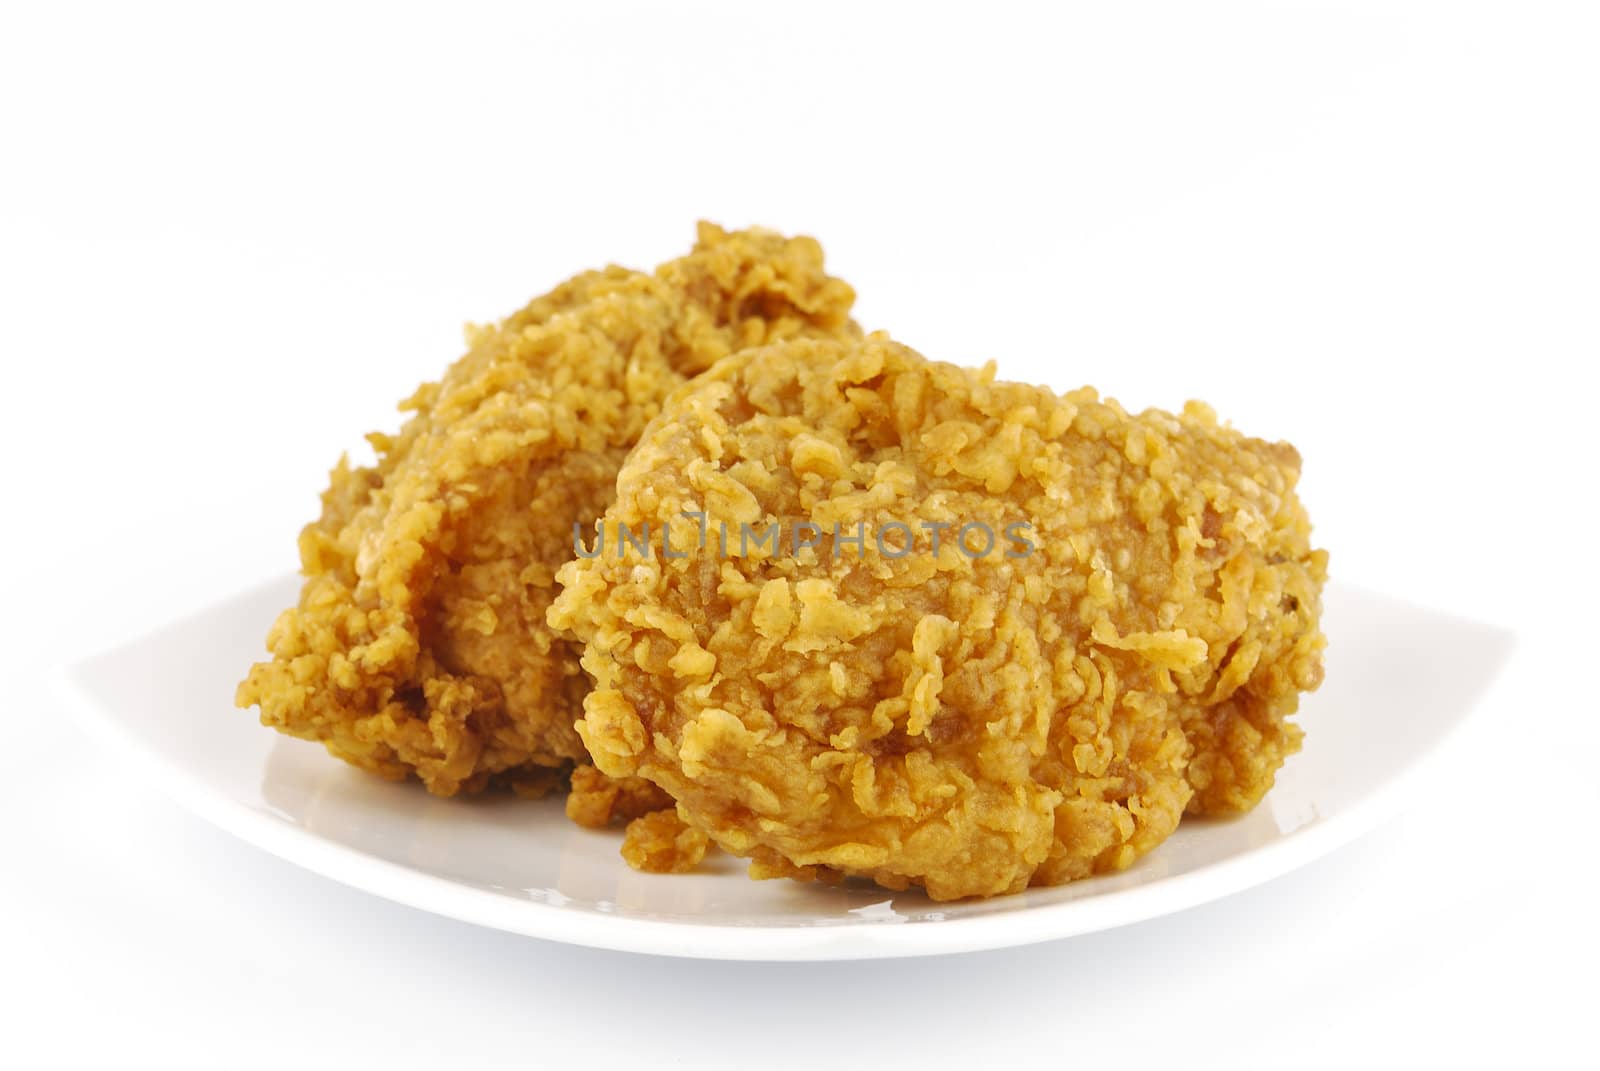 Fried chicken by teen00000